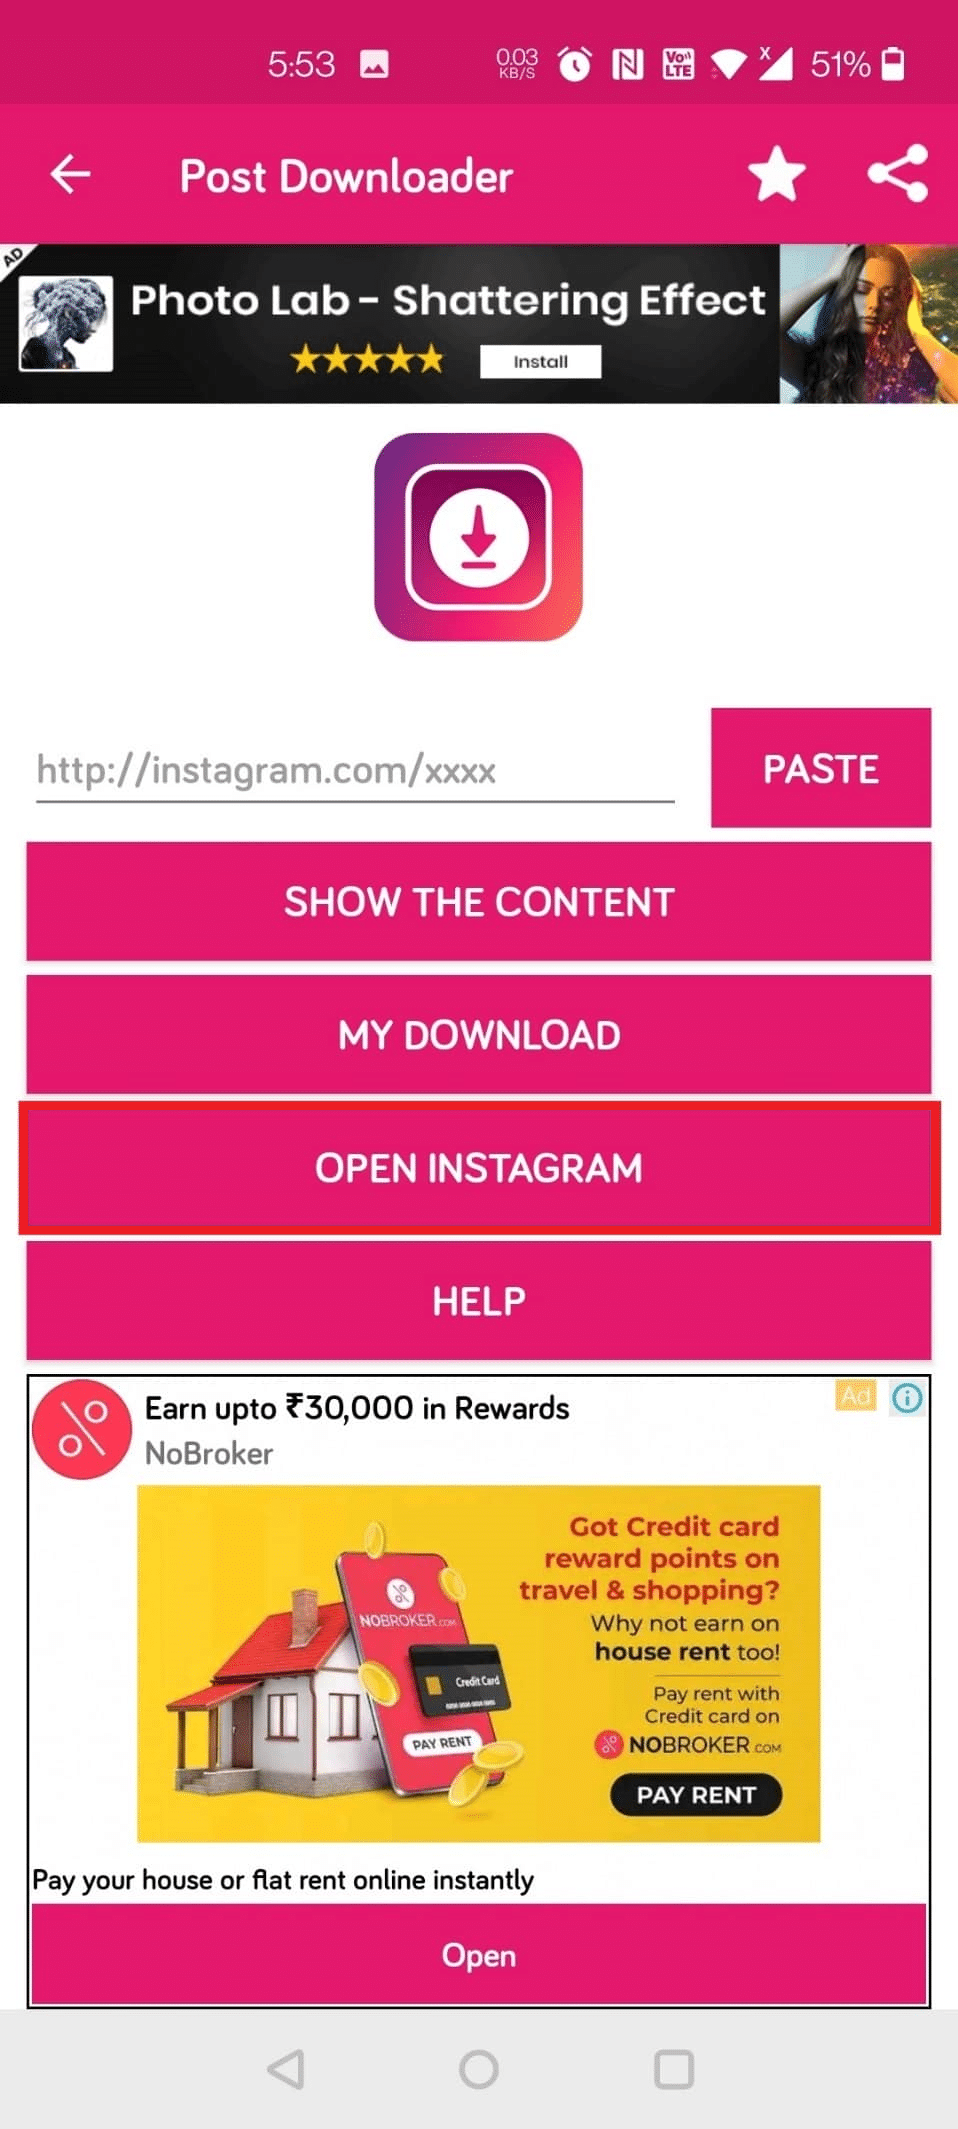 Now, tap on Open Instagram